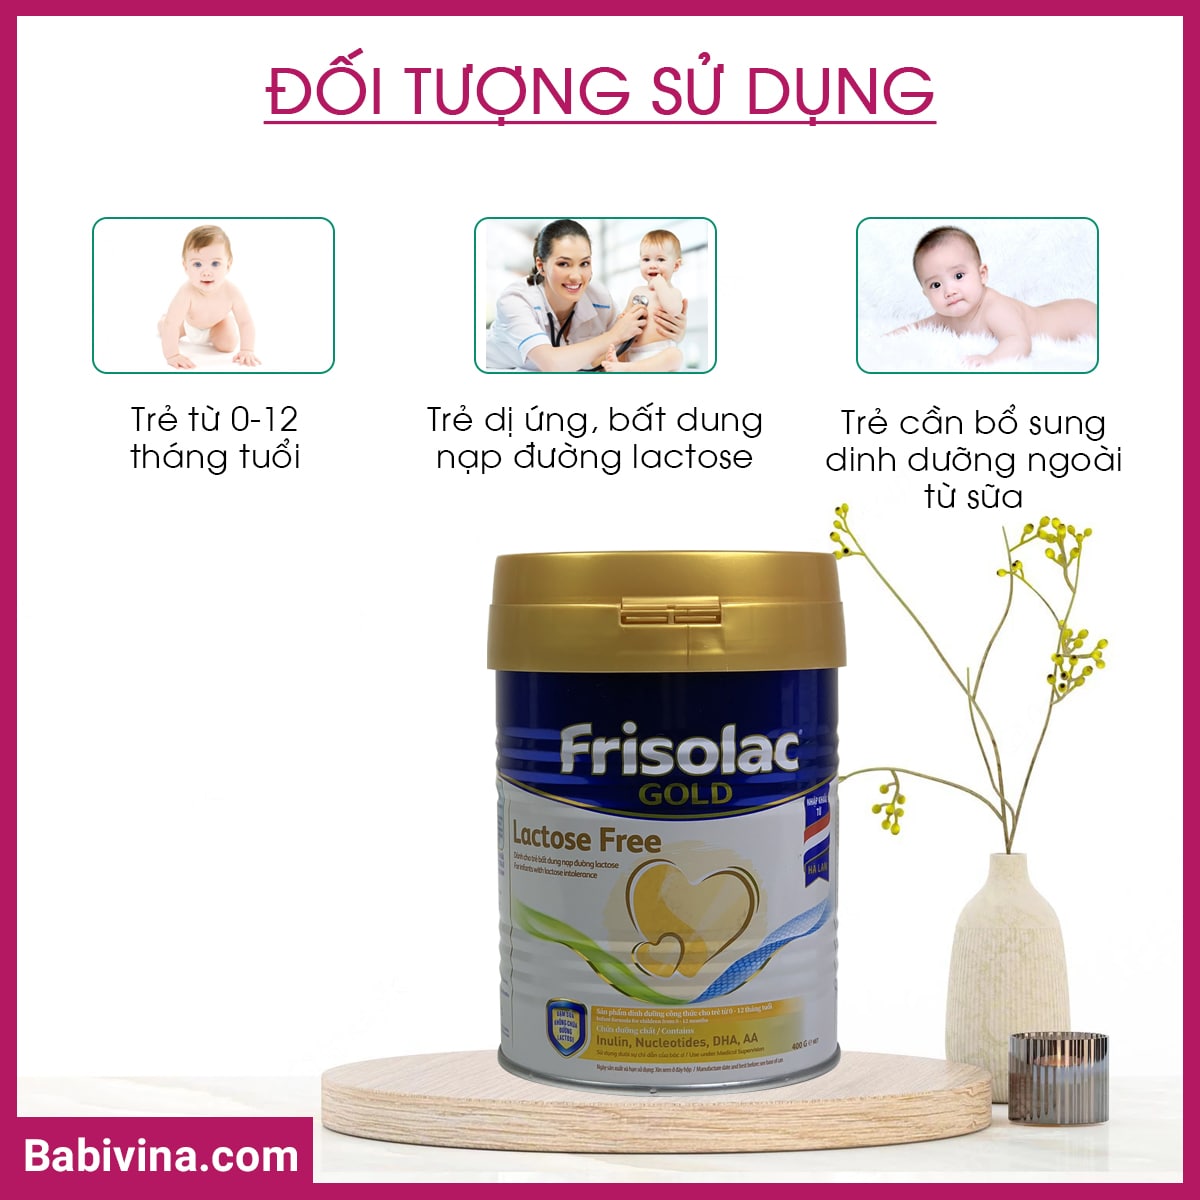 doi-tuong-su-dung-sua-frisolac-gold-lactose-free-400g